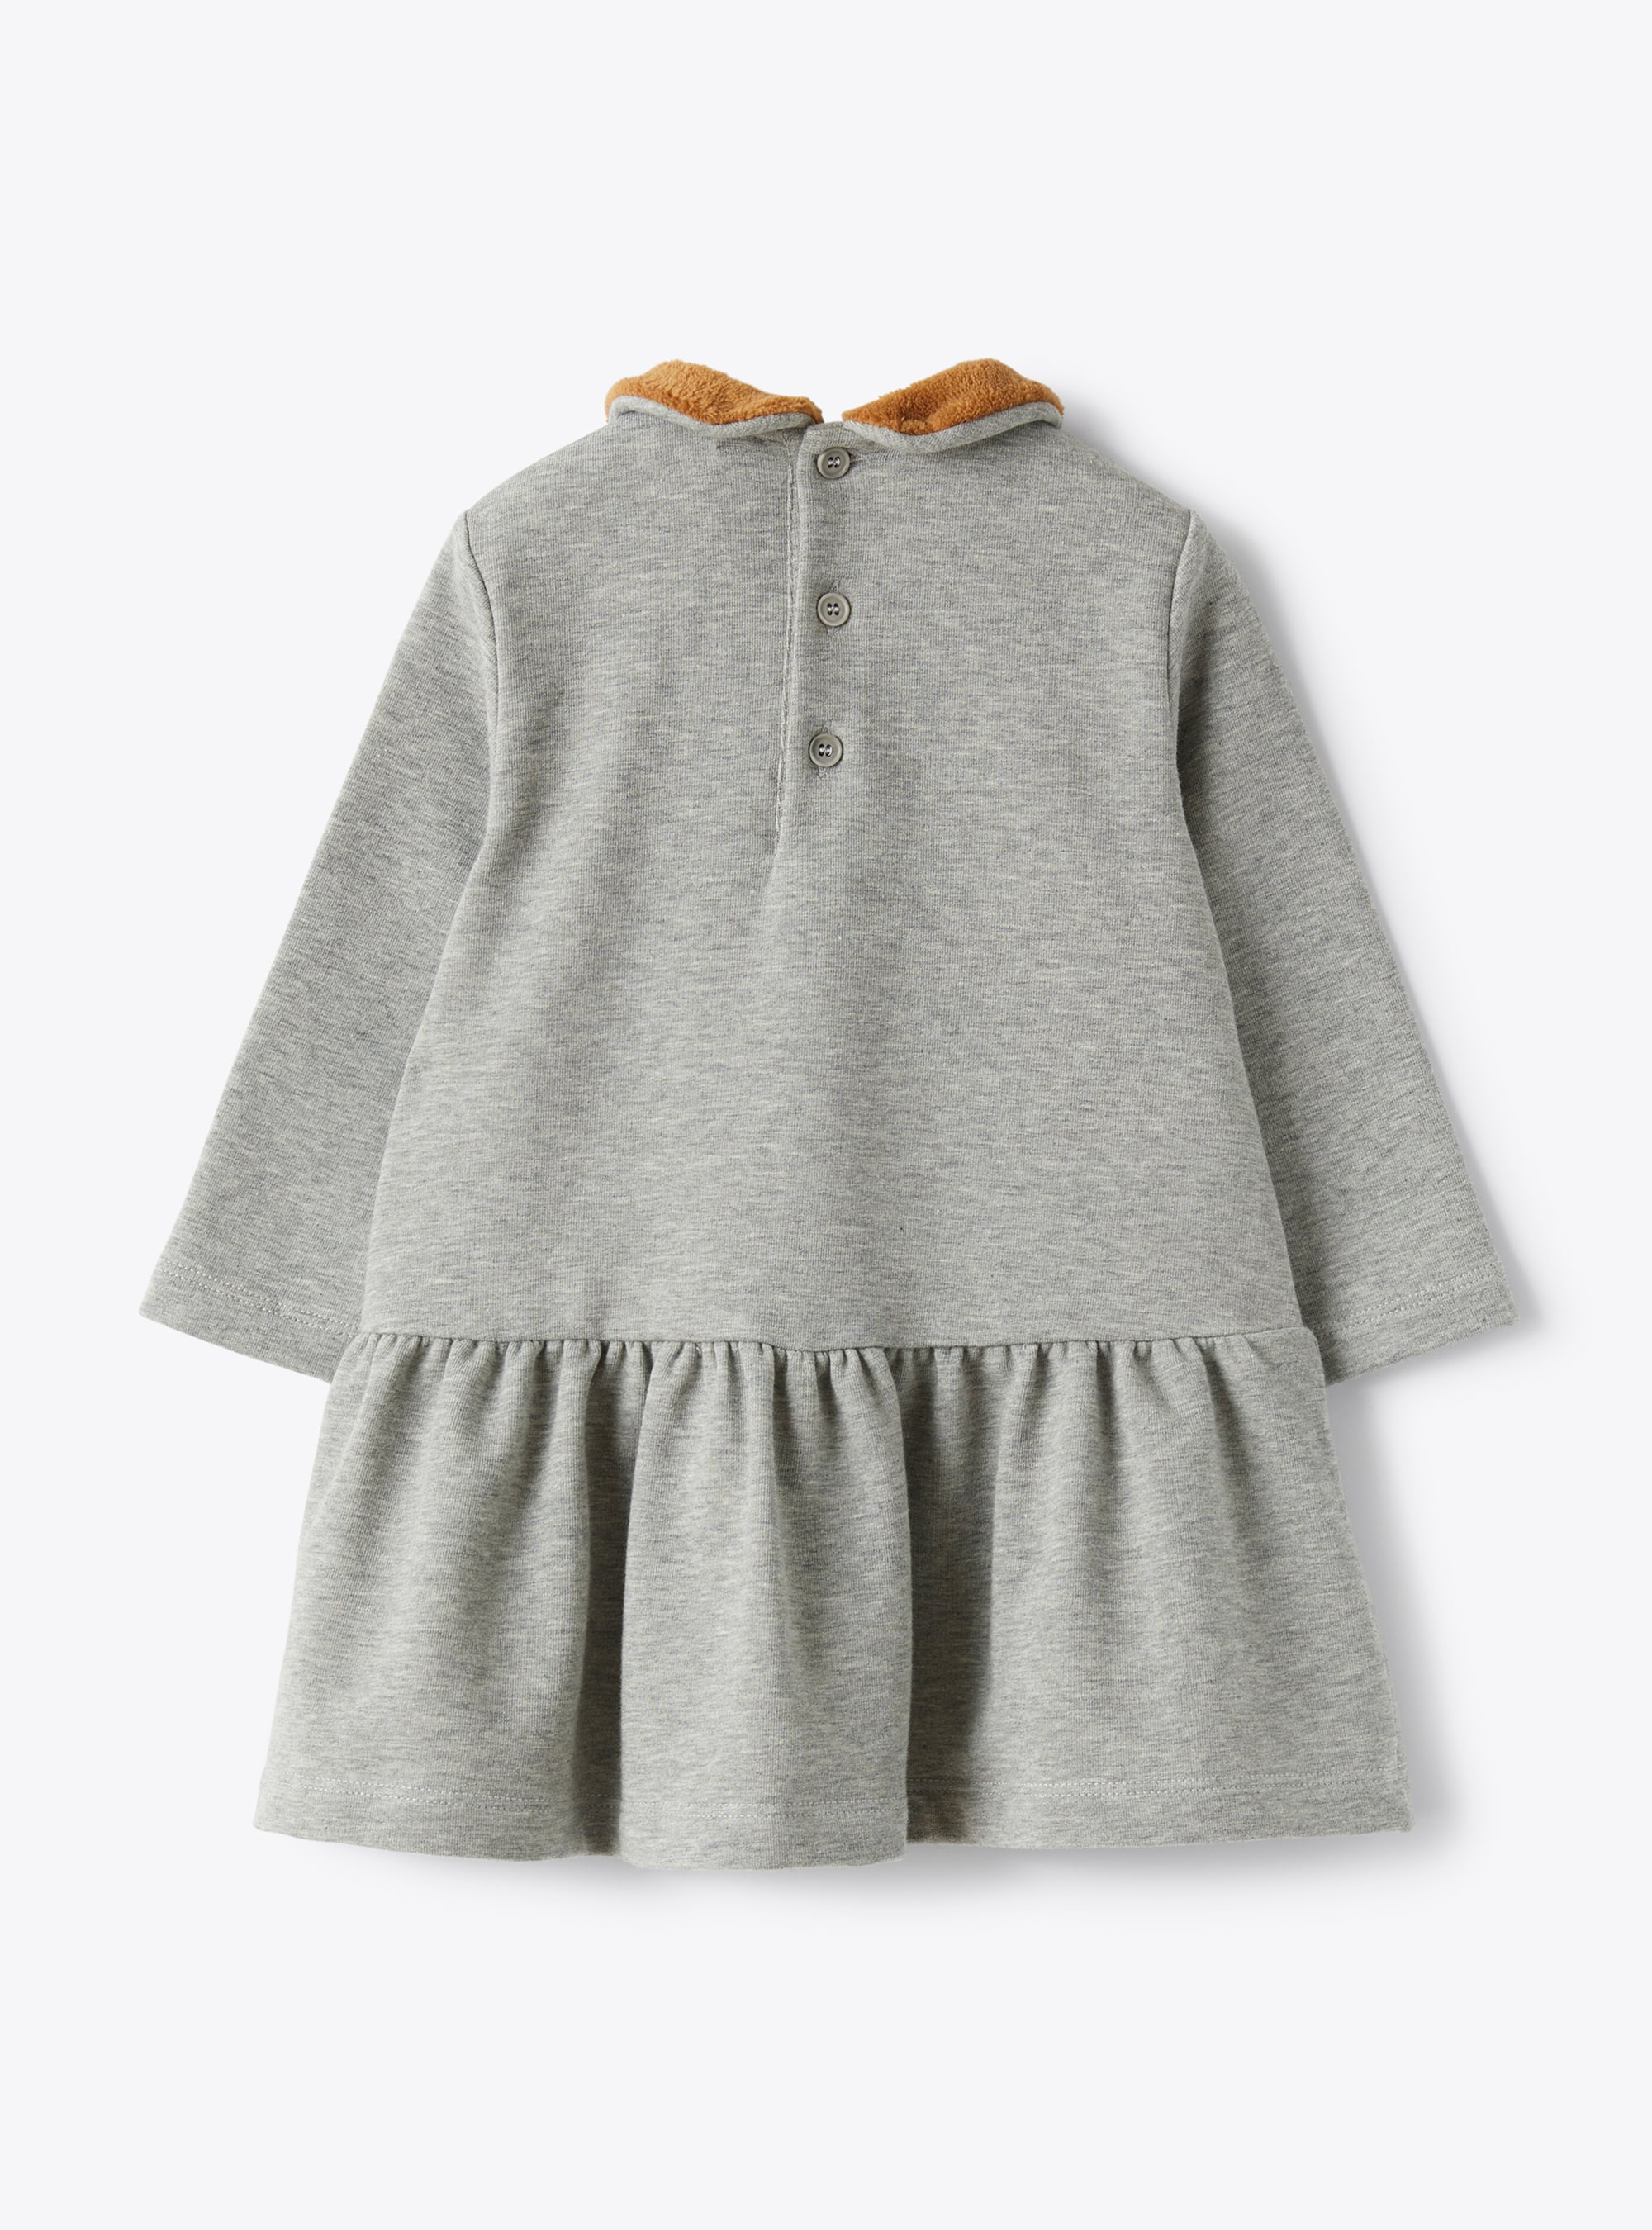 Baby girl’s dress in grey fleece - Grey | Il Gufo